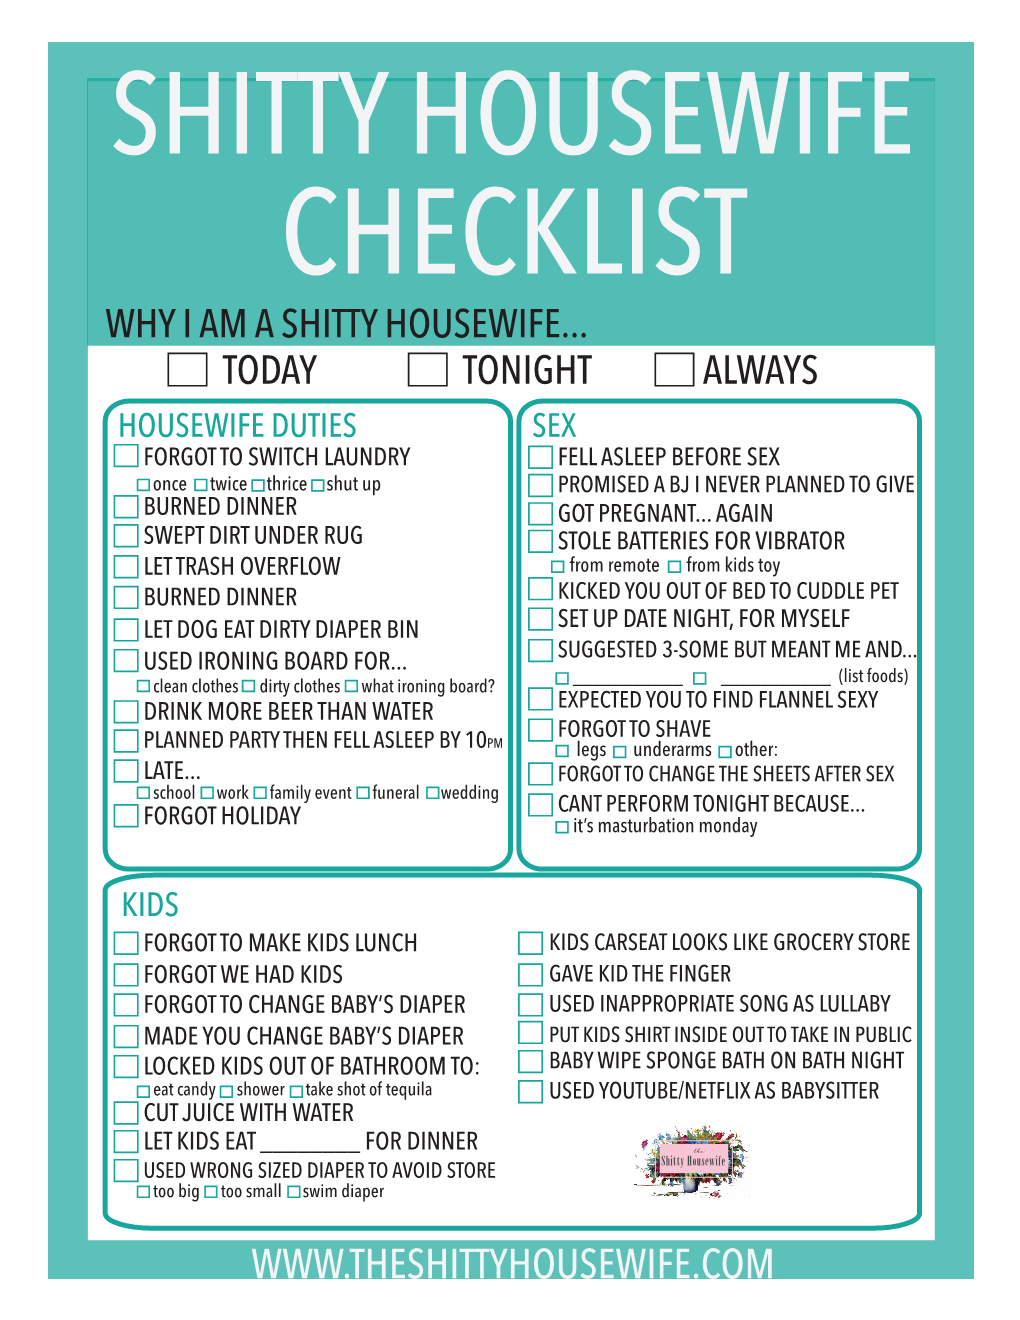 Shitty Housewife Checklist Why I Am a Shitty Housewife